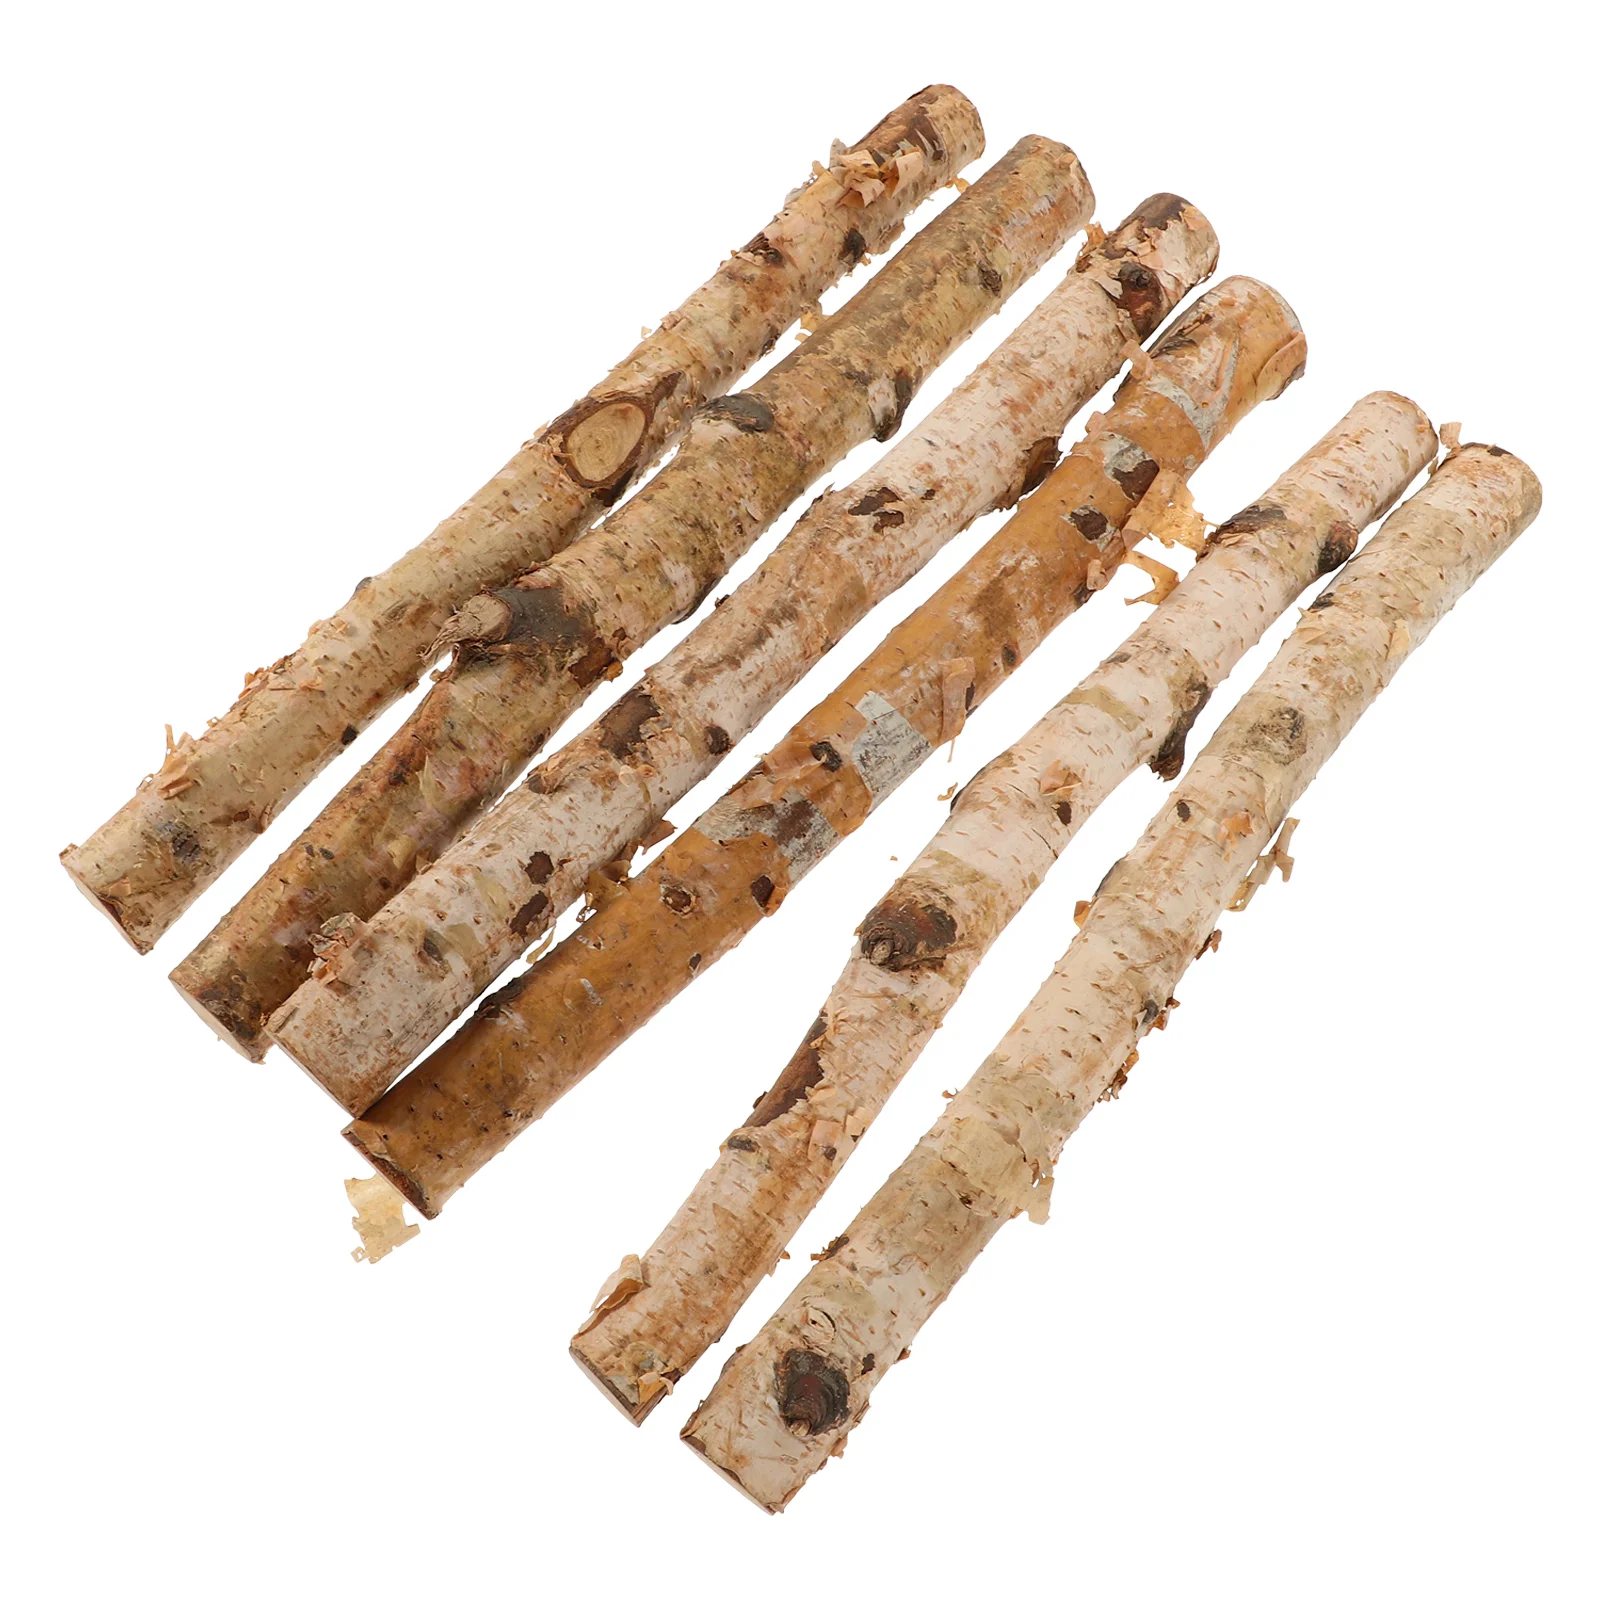 

6pcs Diy Dried Wood Log Handicraft Tree Branch Diy Wood Sticks for Flower Arrangement and Diy Crafts Use